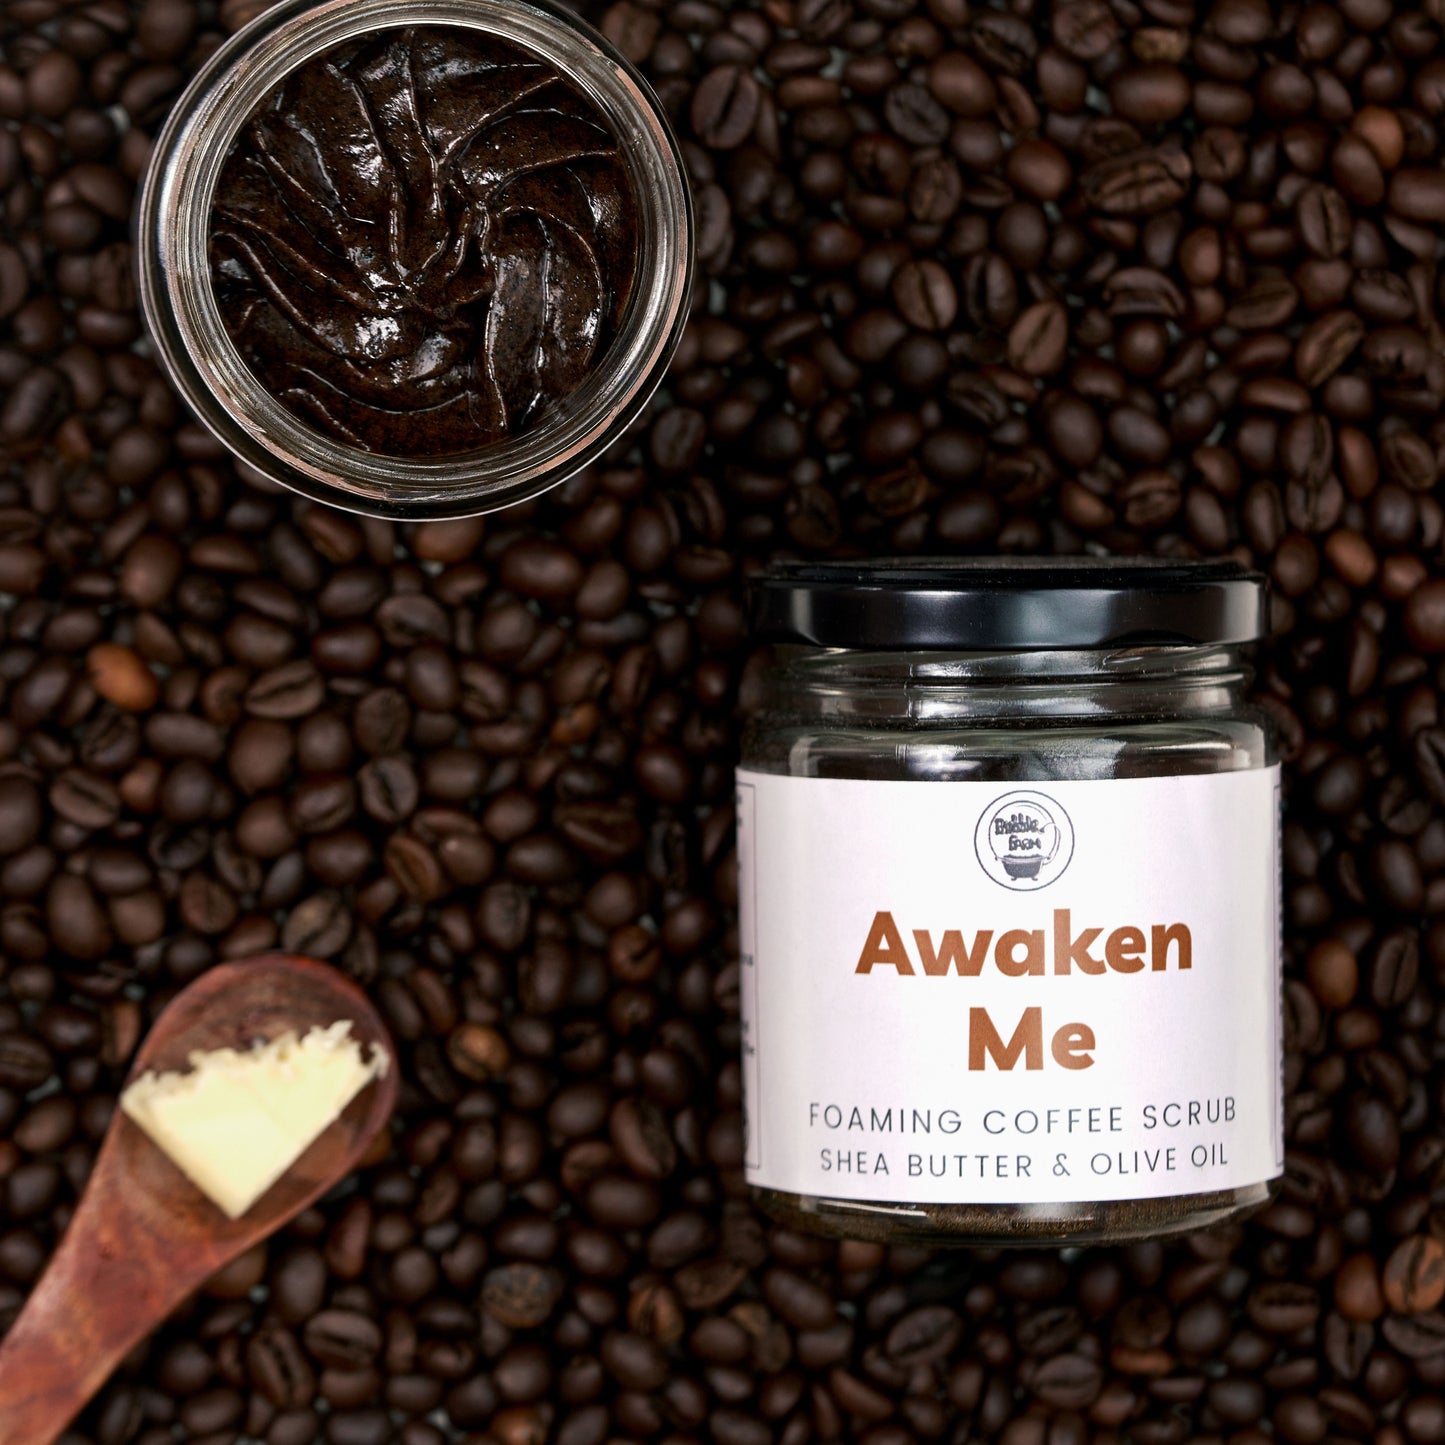 Awaken Me! Coffee Foaming Scrub ☕